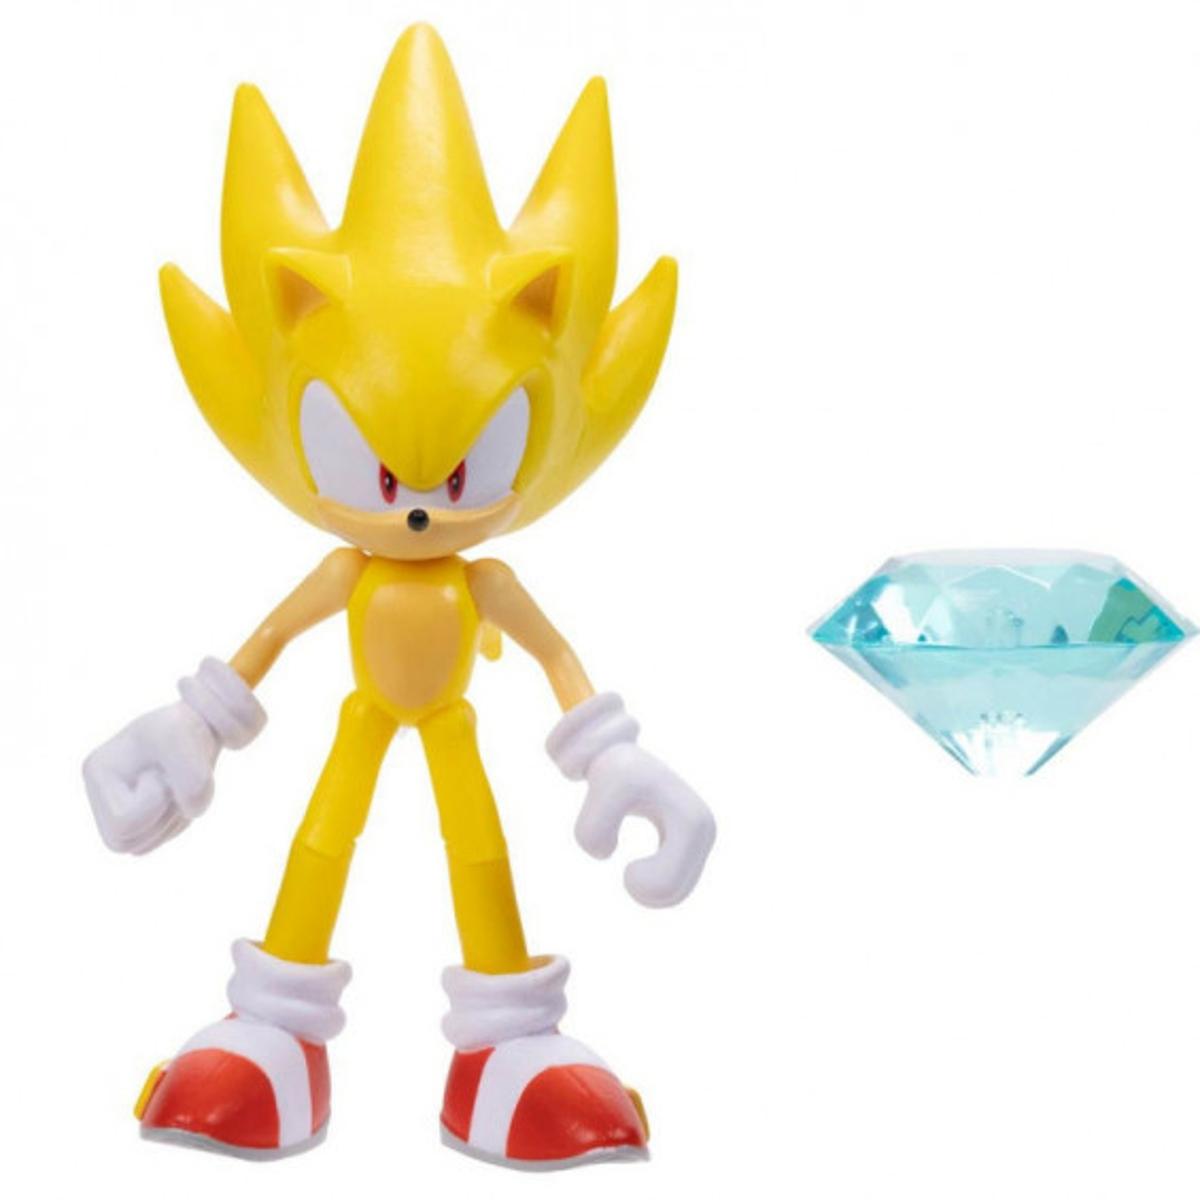 Figuras articuladas Sonic 10 cm varios modelos serie 8 (Varios